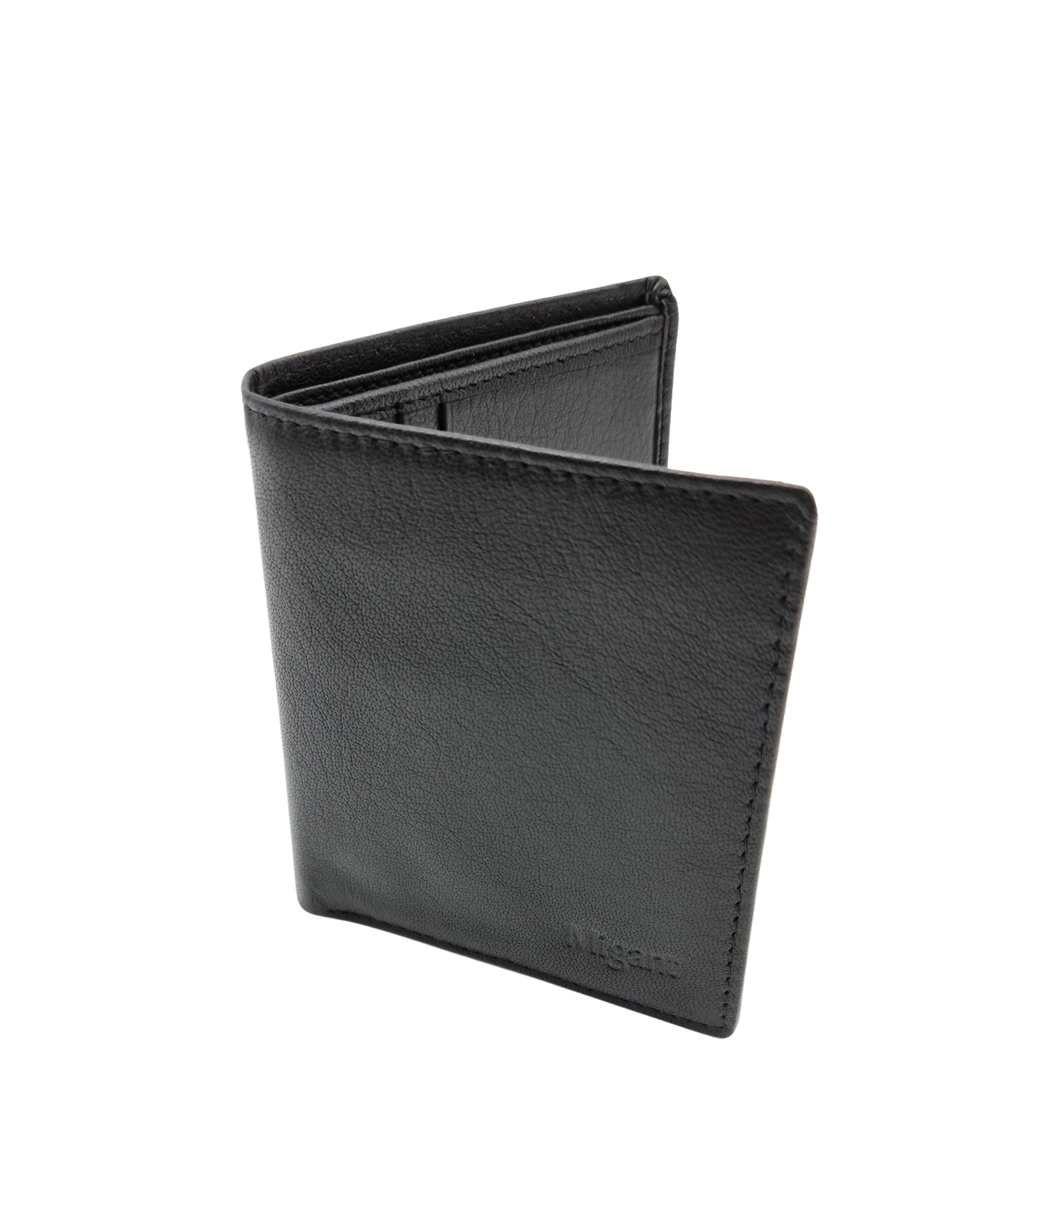 Migant Design black leather wallet 6452 - Migant